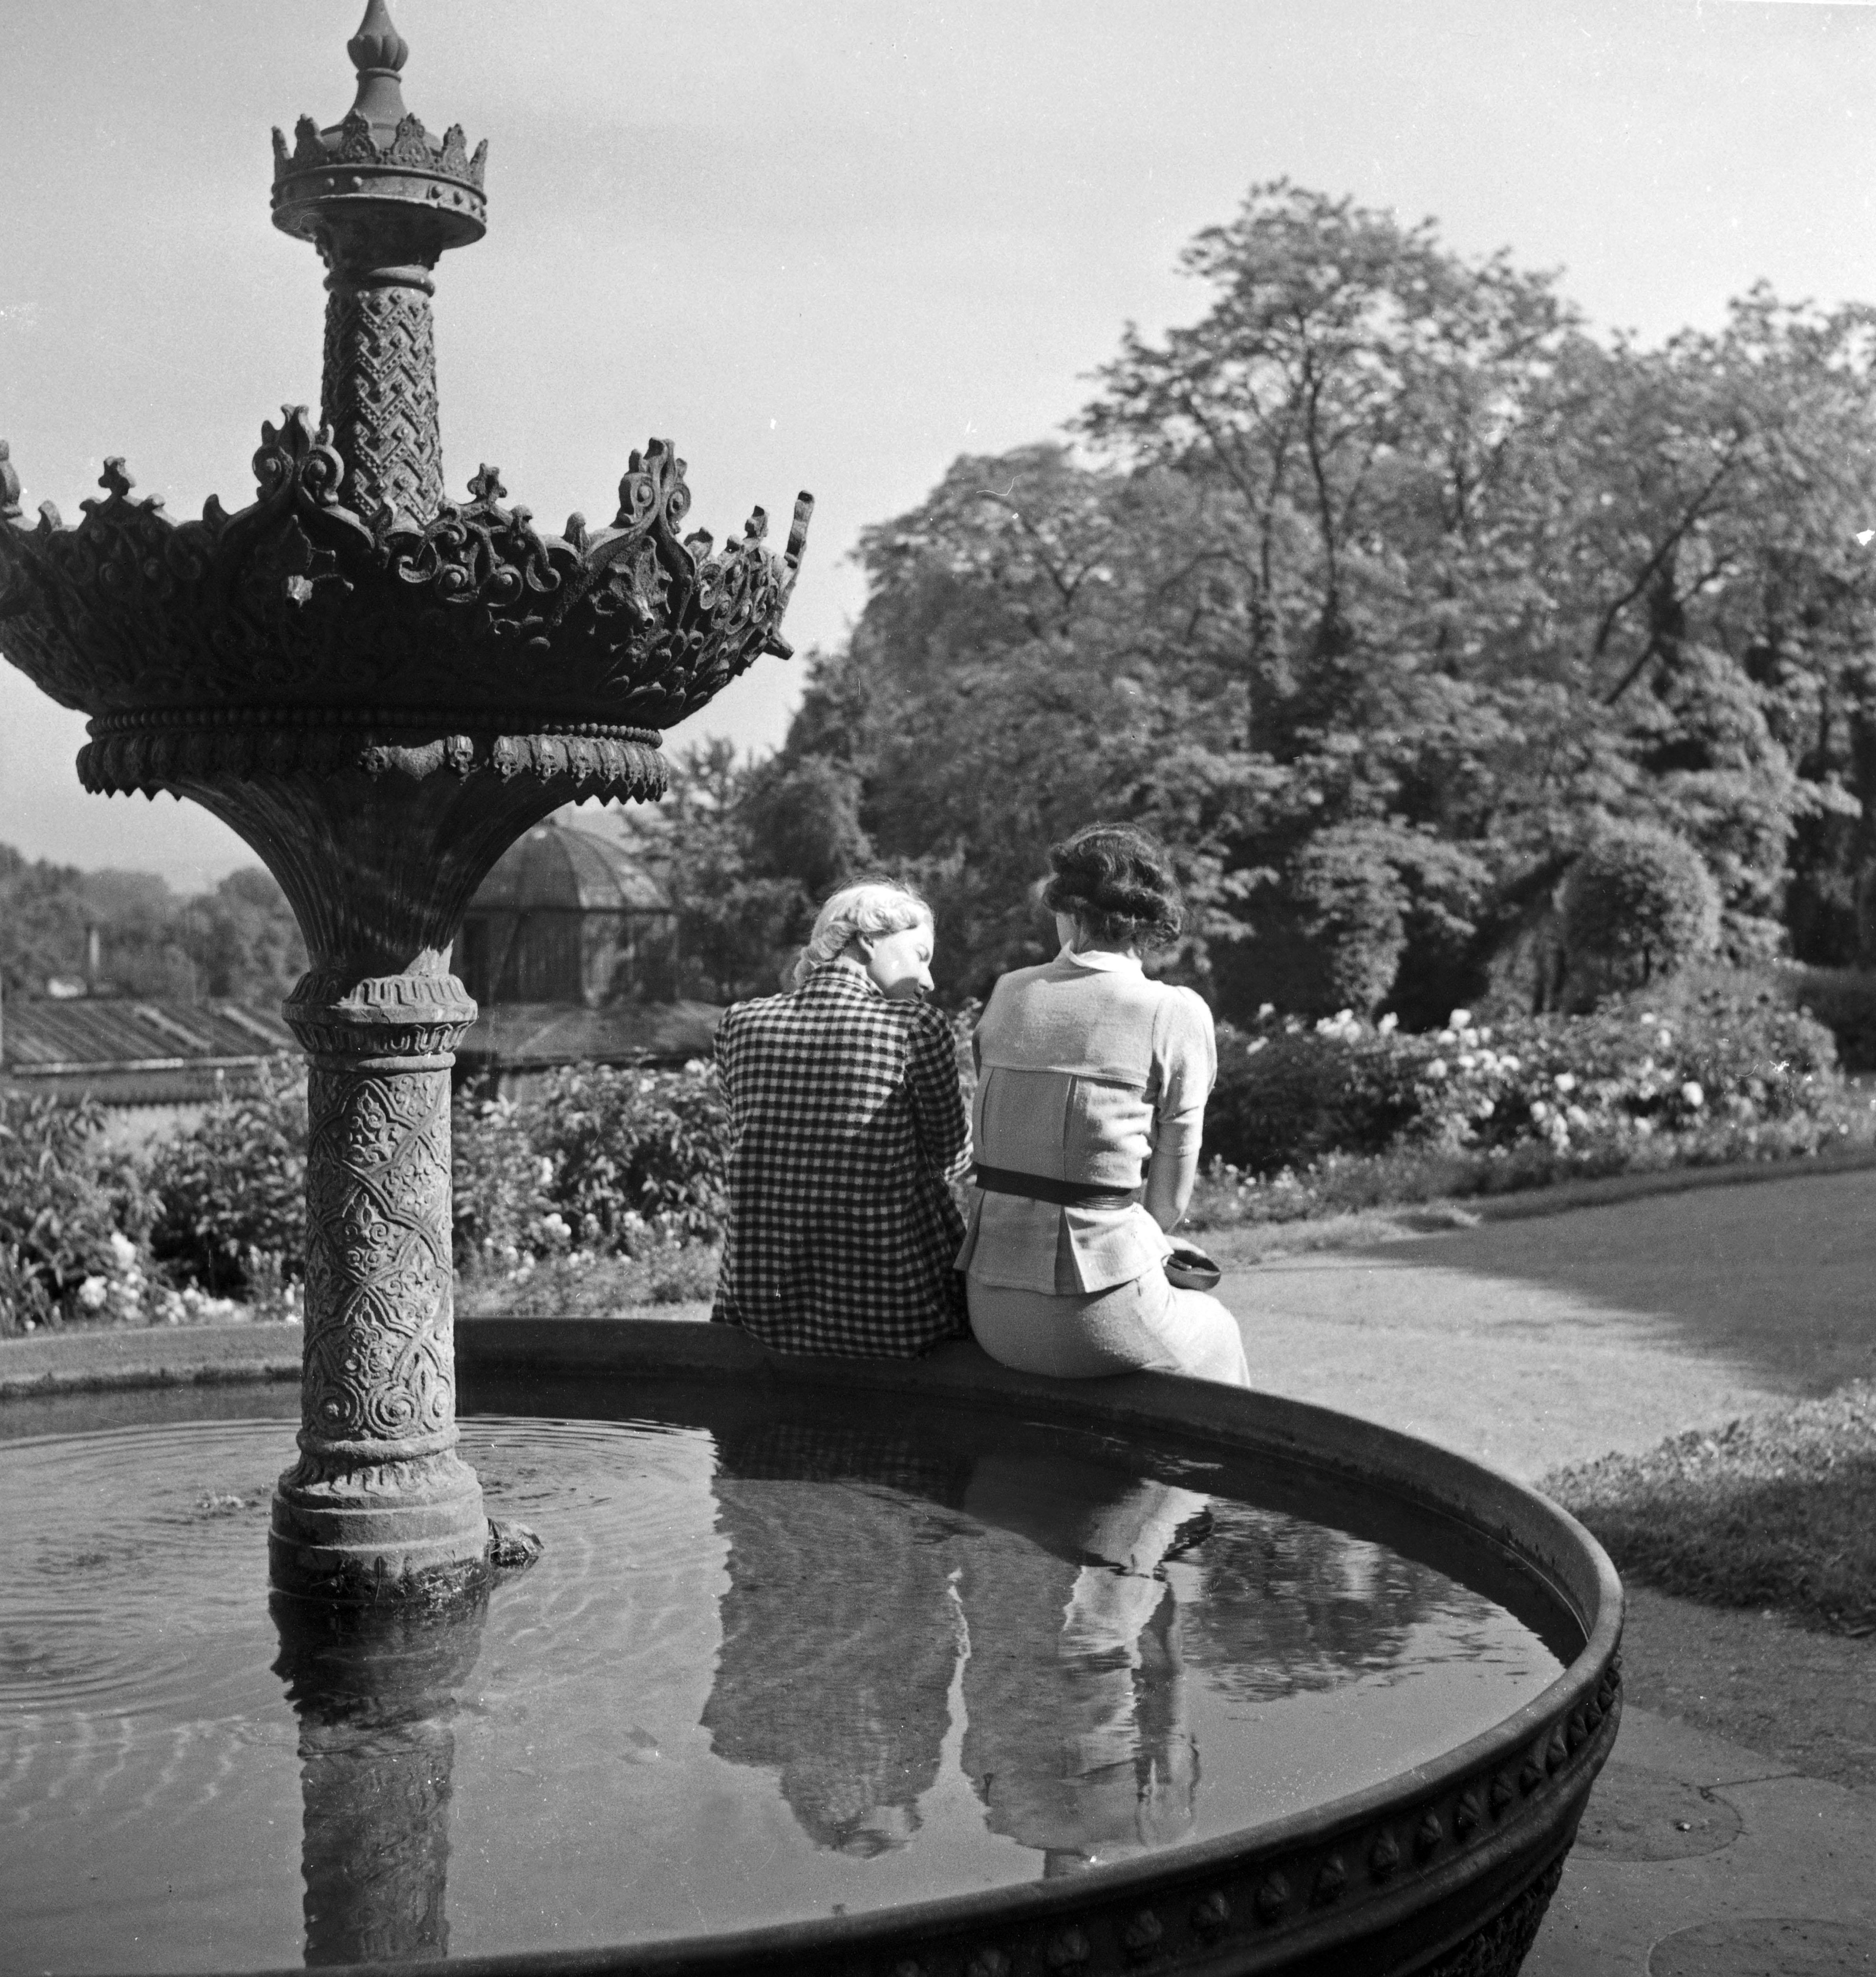 Black and White Photograph Karl Heinrich Lämmel - Femmes à la fontaine Wilhelma gradens, Stuttgart, Allemagne 1935, Imprimé plus tard